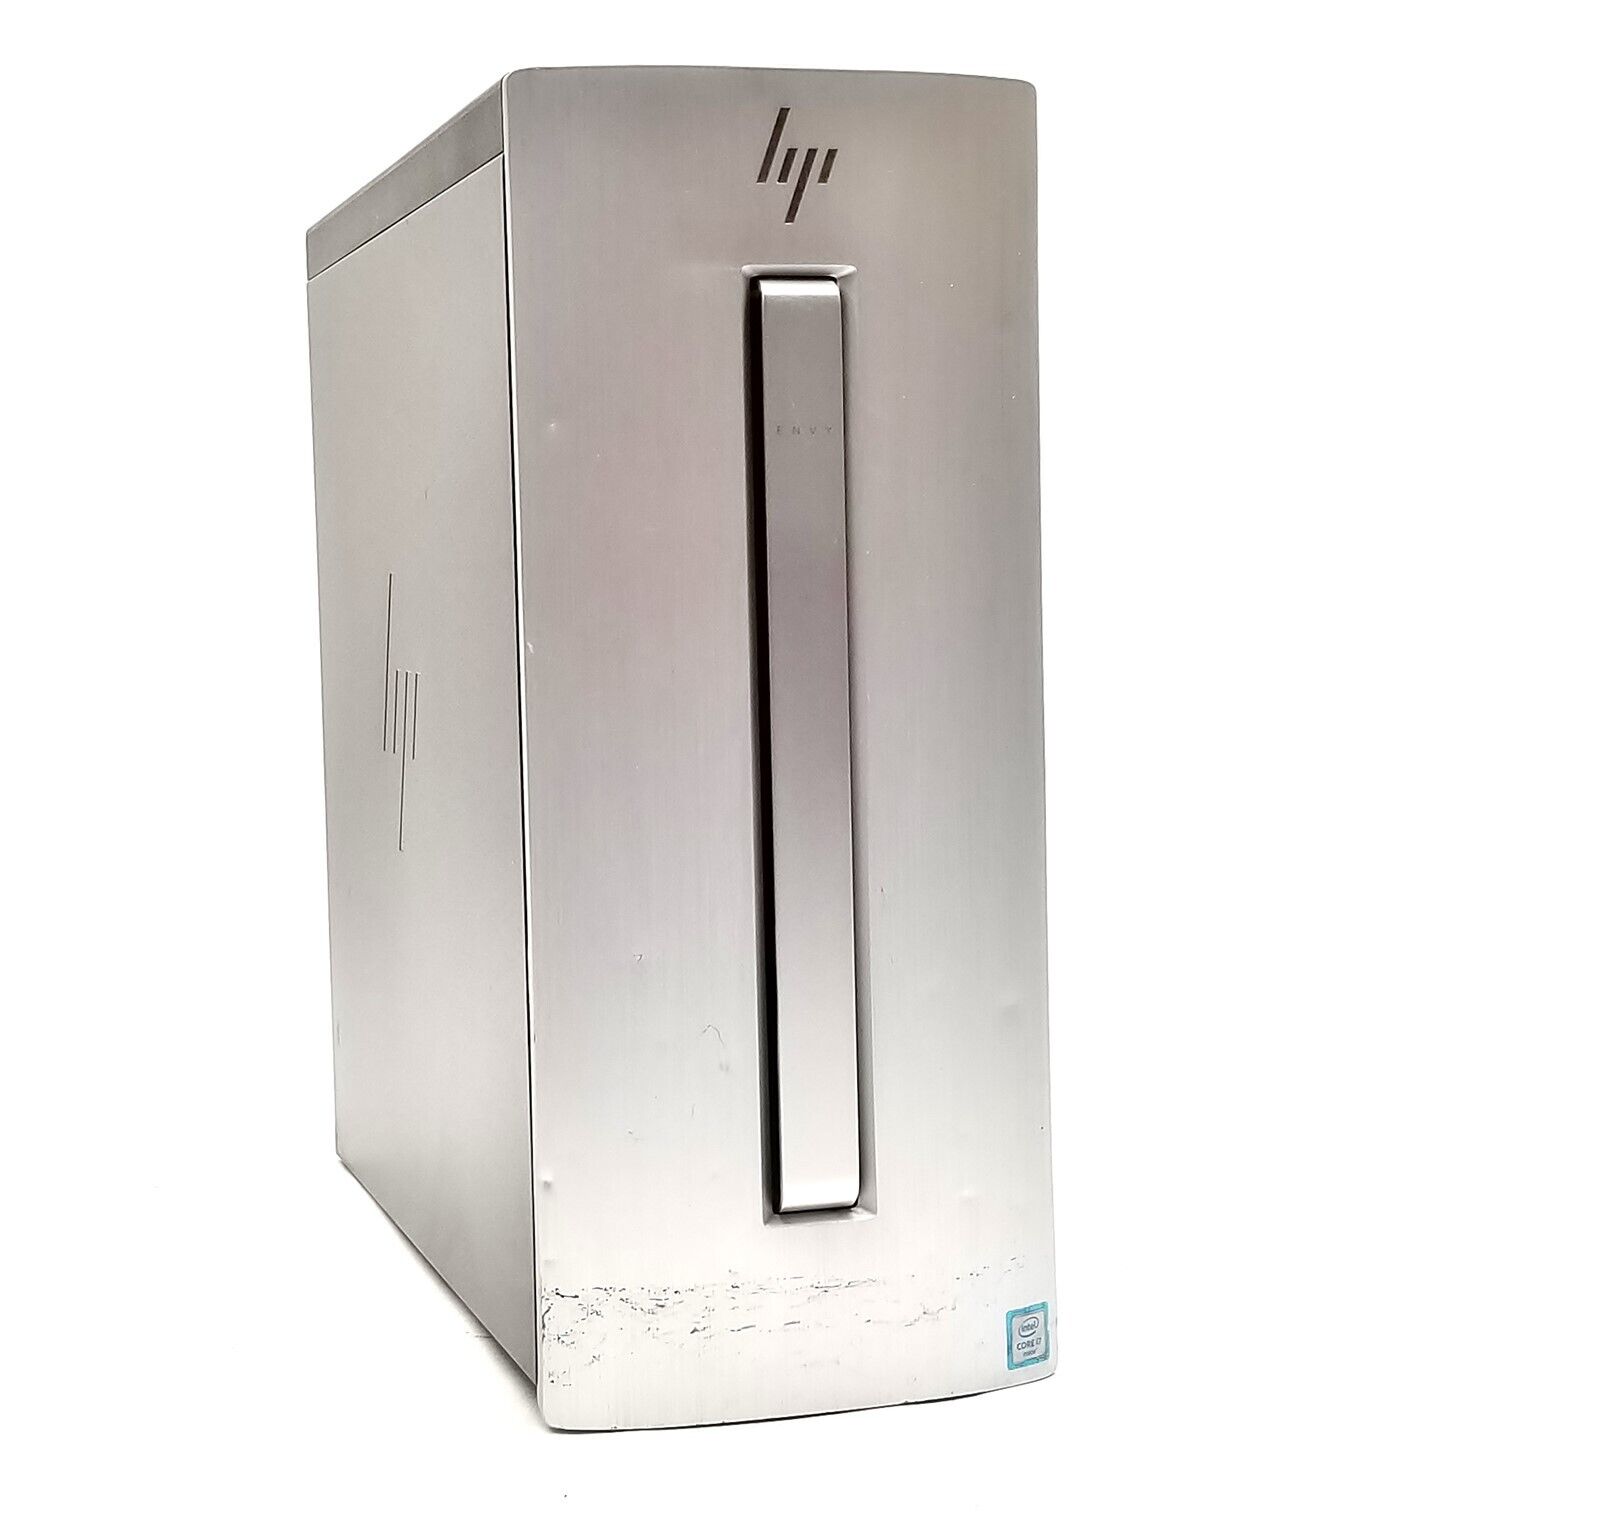 HP ENVY 750-425qe Desktop i7-6700 3.40GHz 12GB 512GB SSD Win11 PC GTX 750Ti WiFi